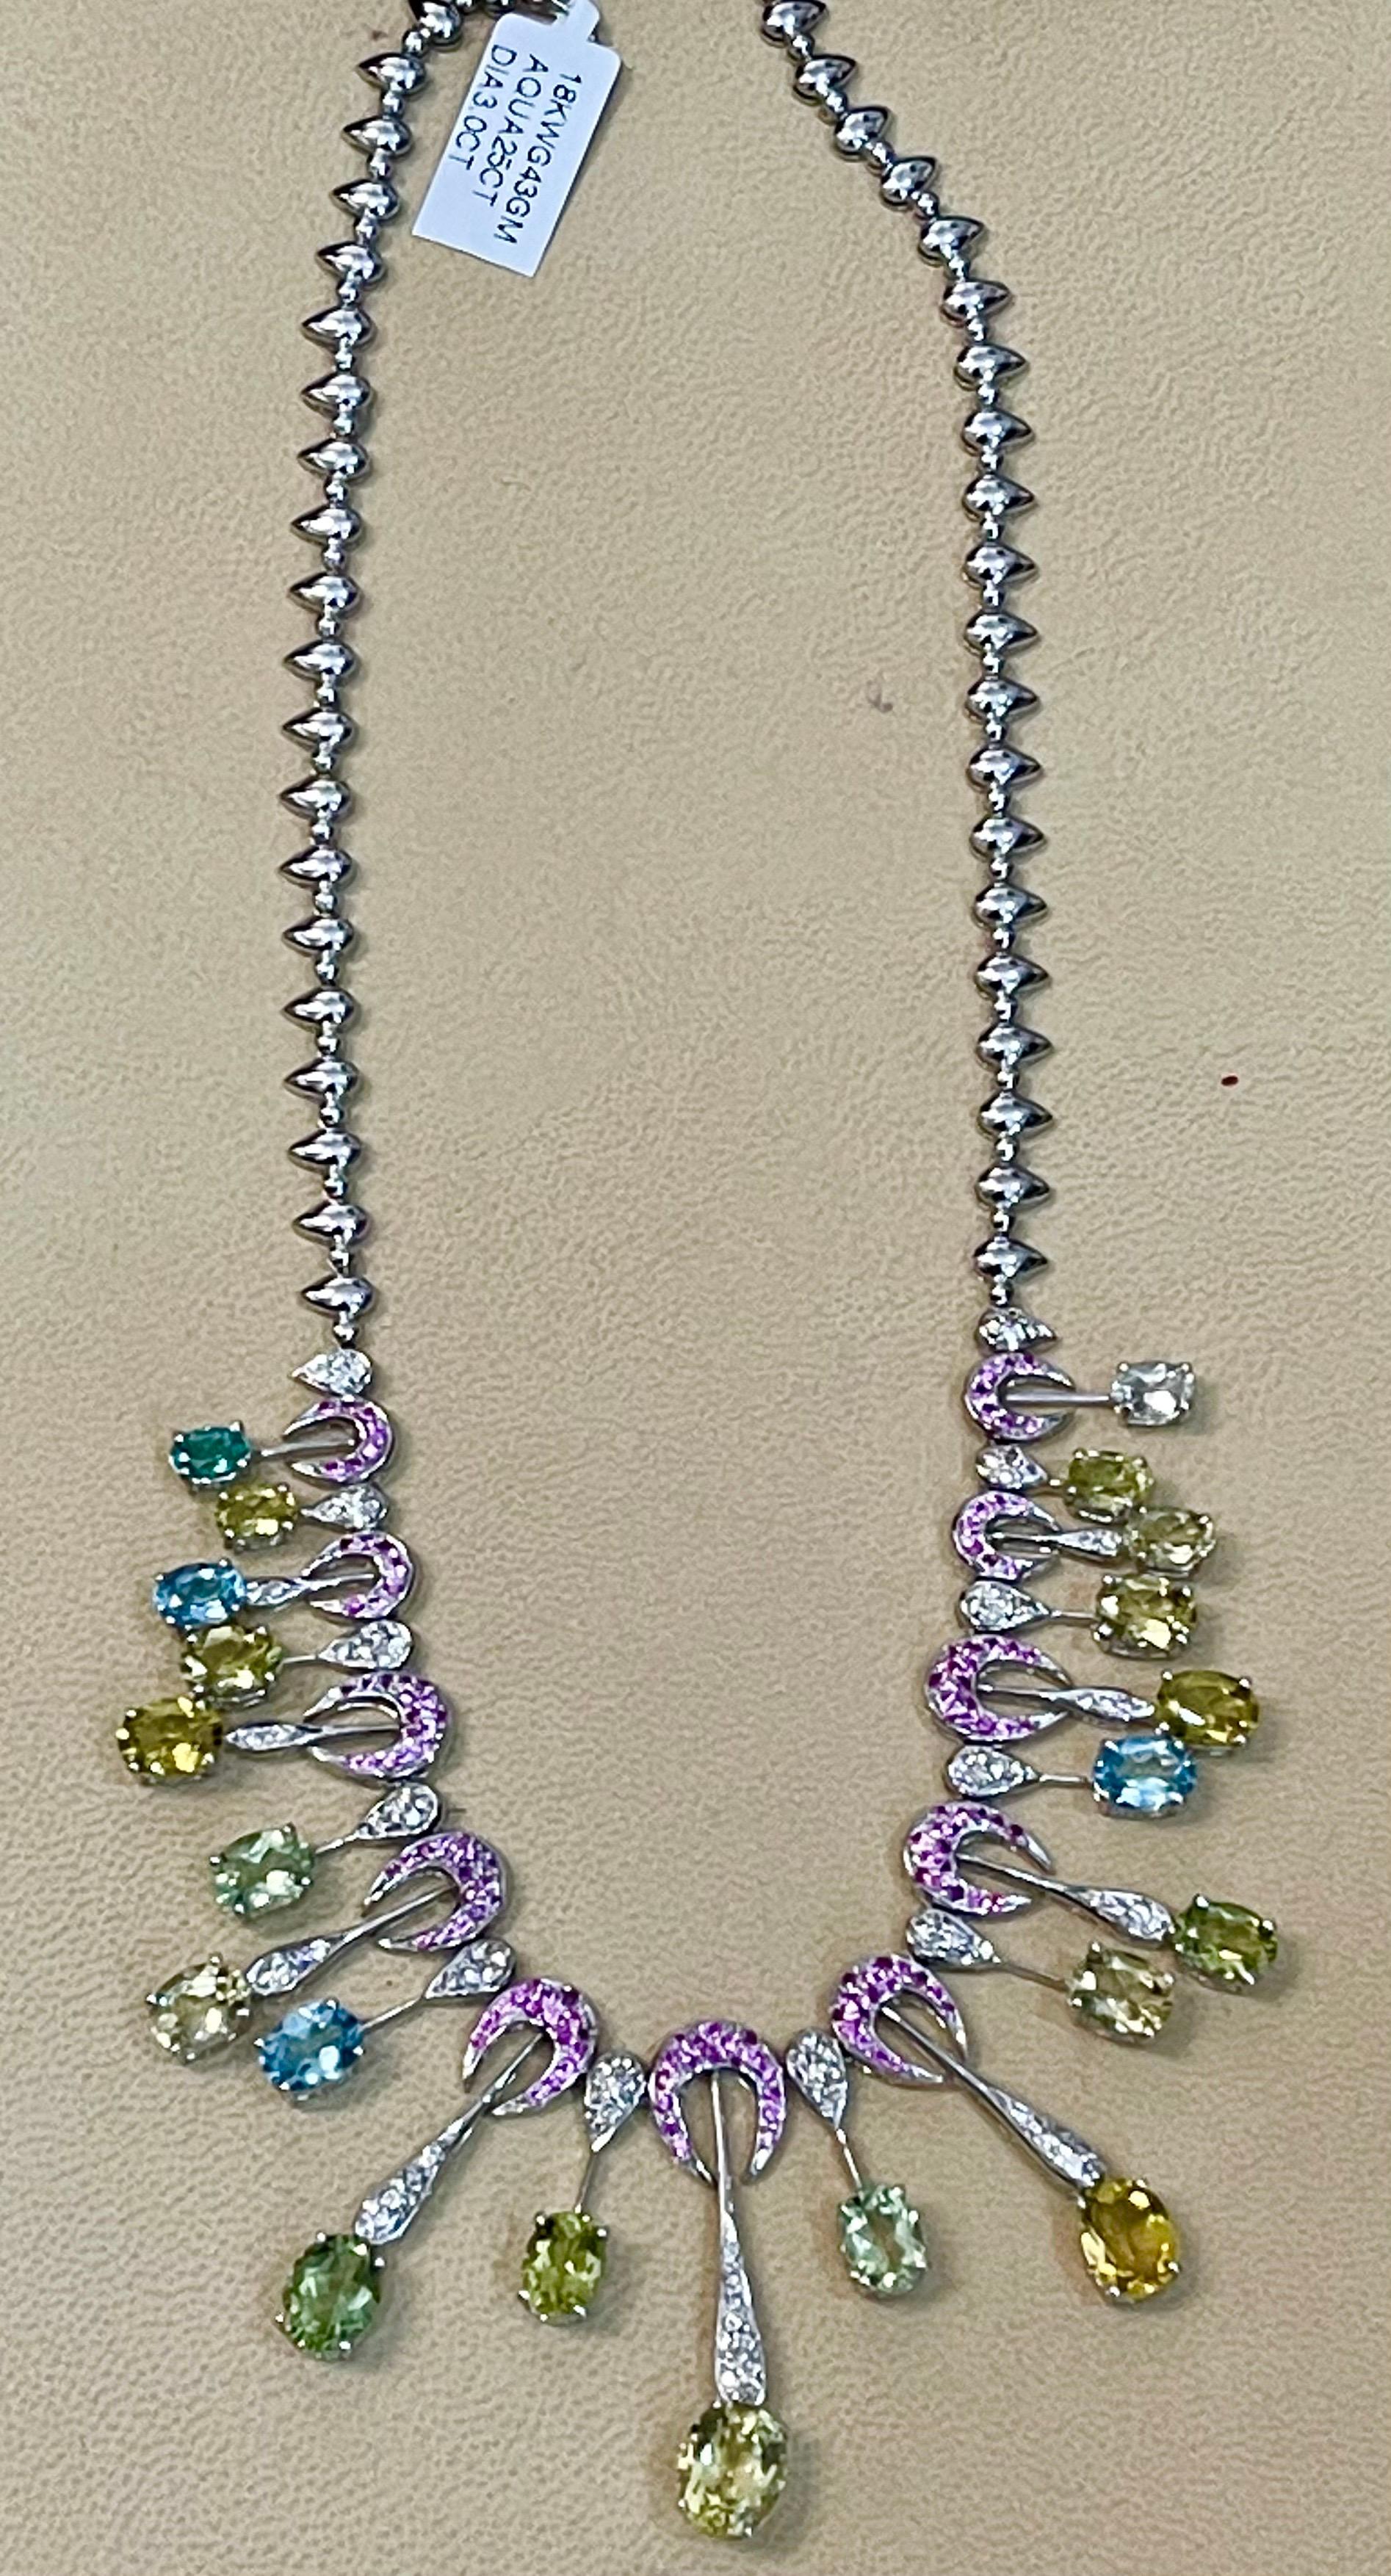 25 Carat Multi-Color Aquamarine and Diamonds Necklace 18 Karat White Gold For Sale 1